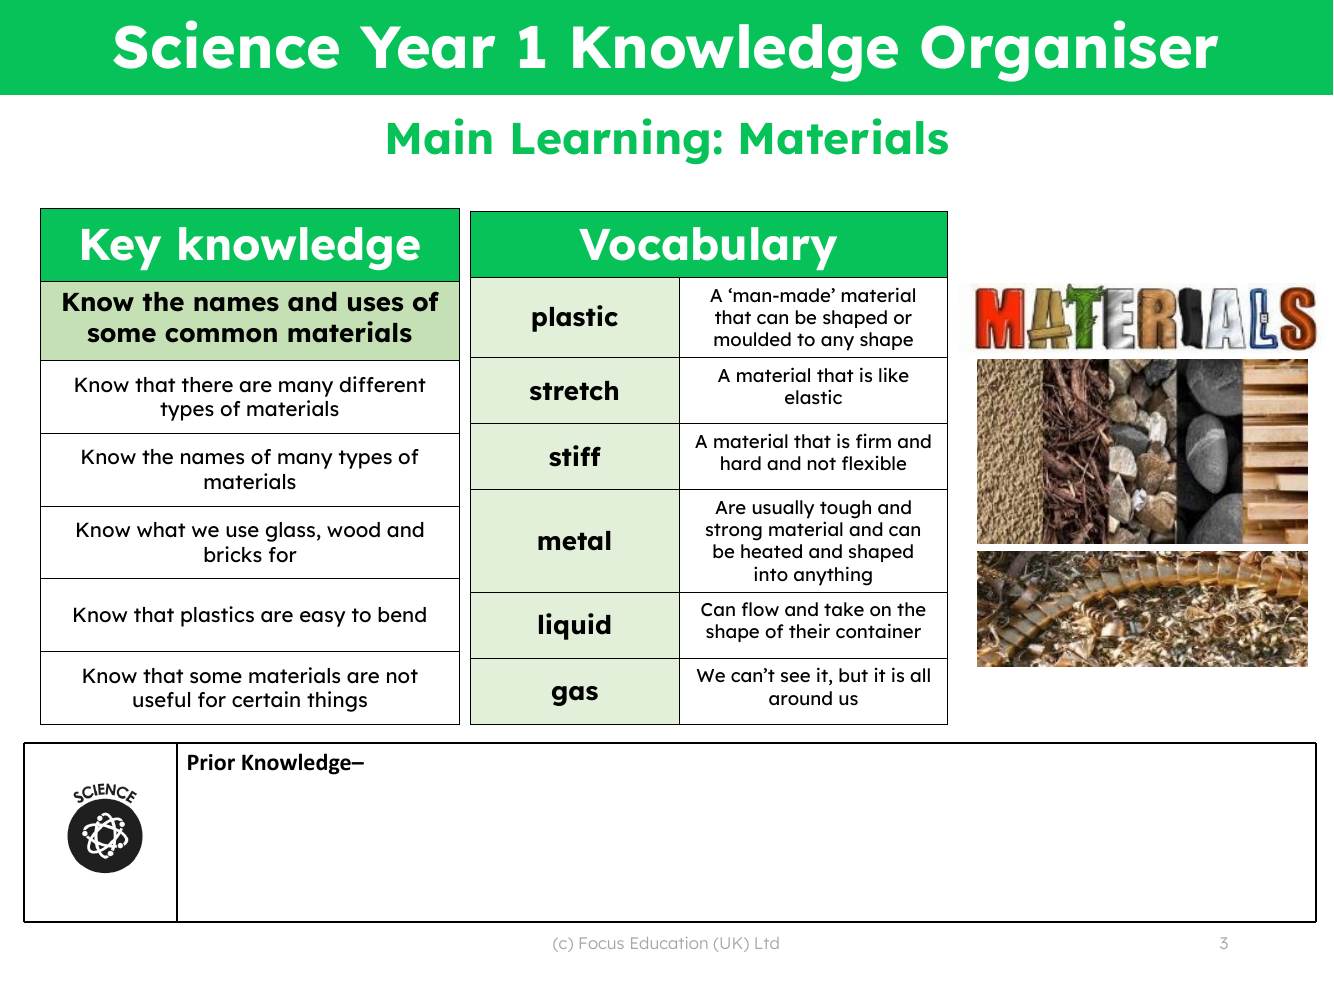 Knowledge organiser - Materials - Year 1